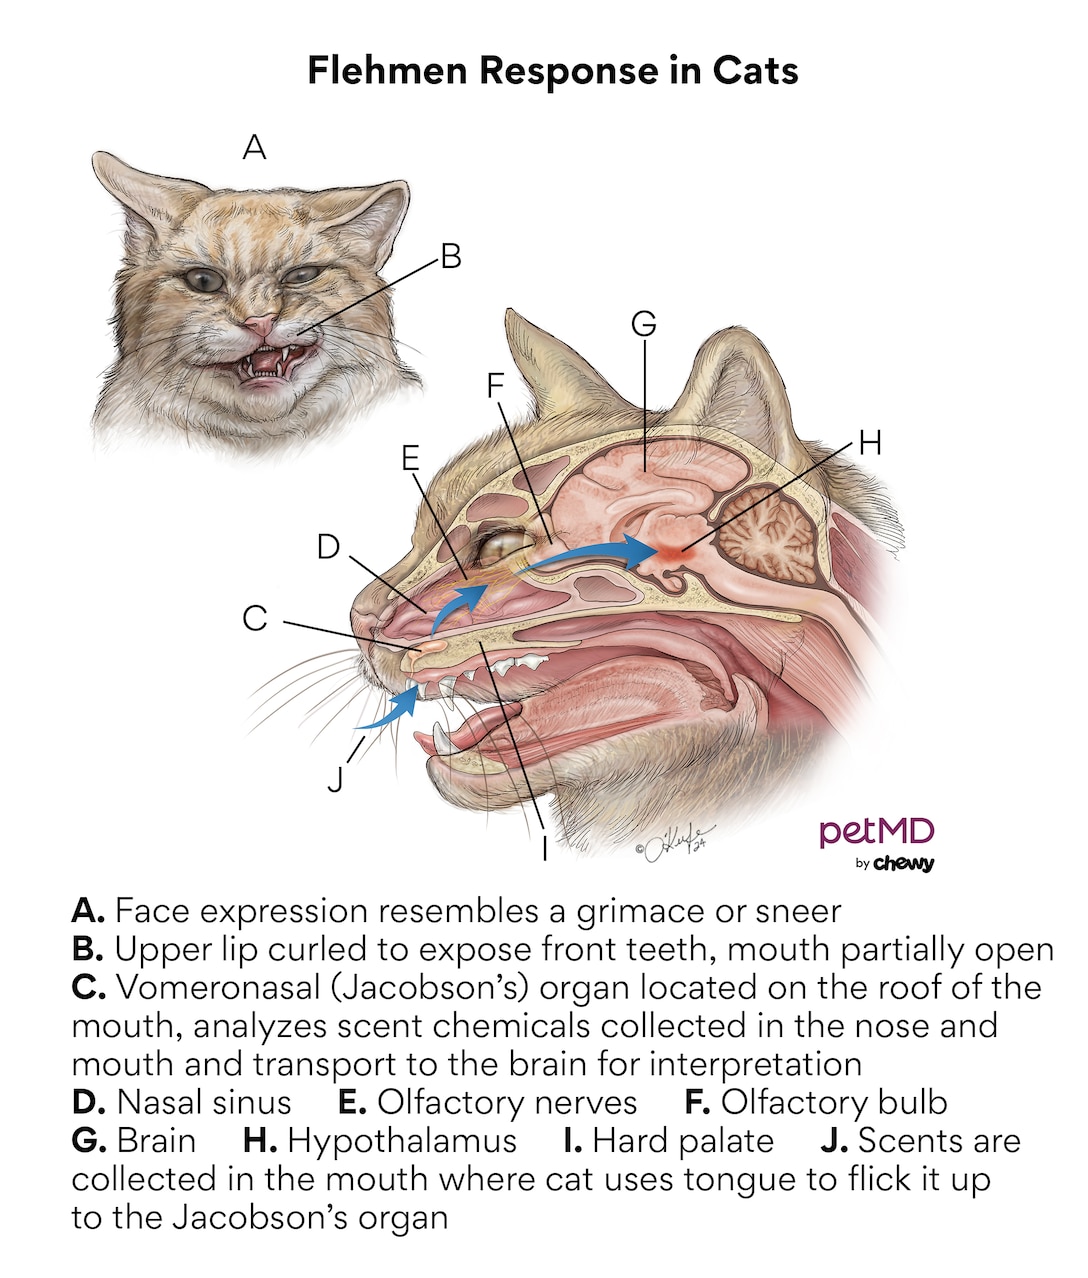 A diagram of the flehmen response in cats.